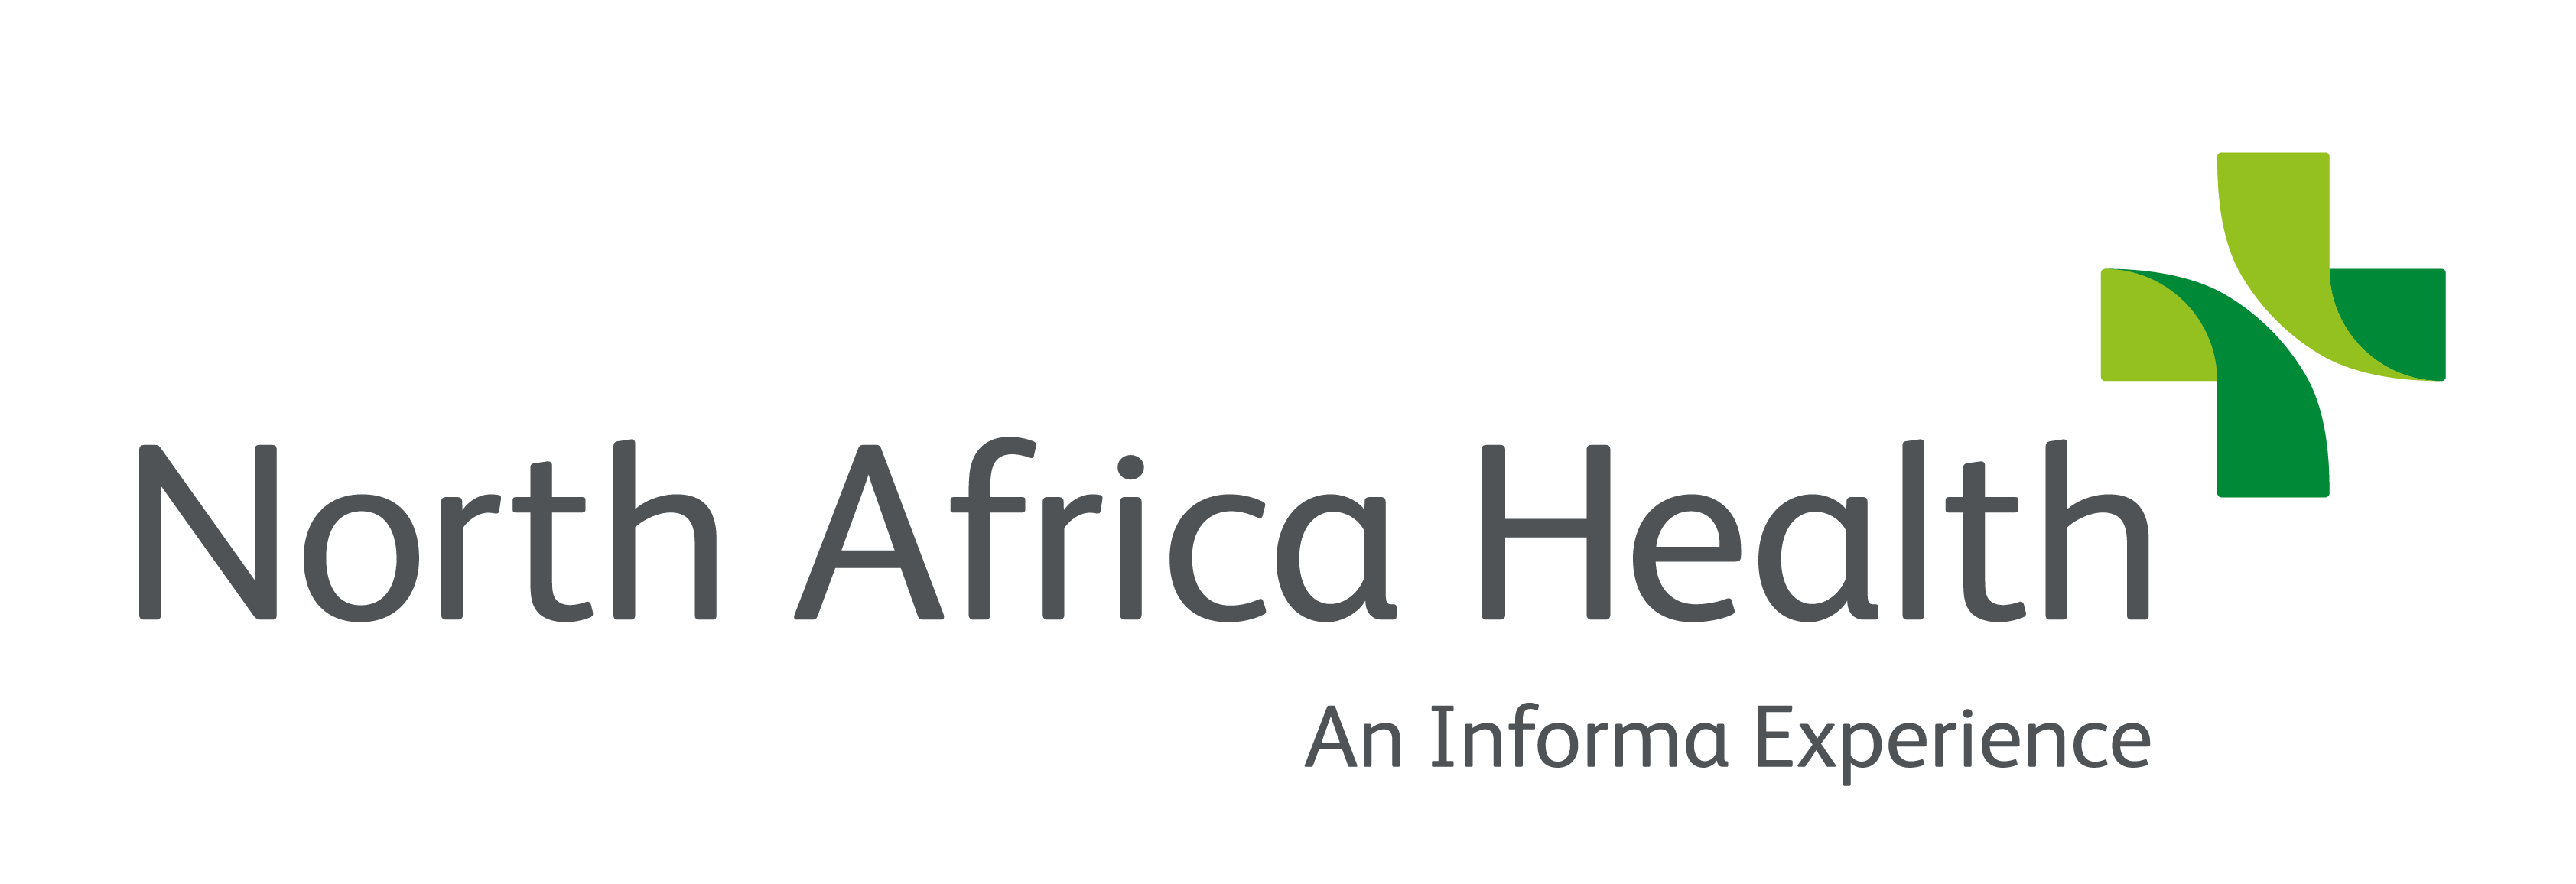 NORTH AFRICA HEALTH